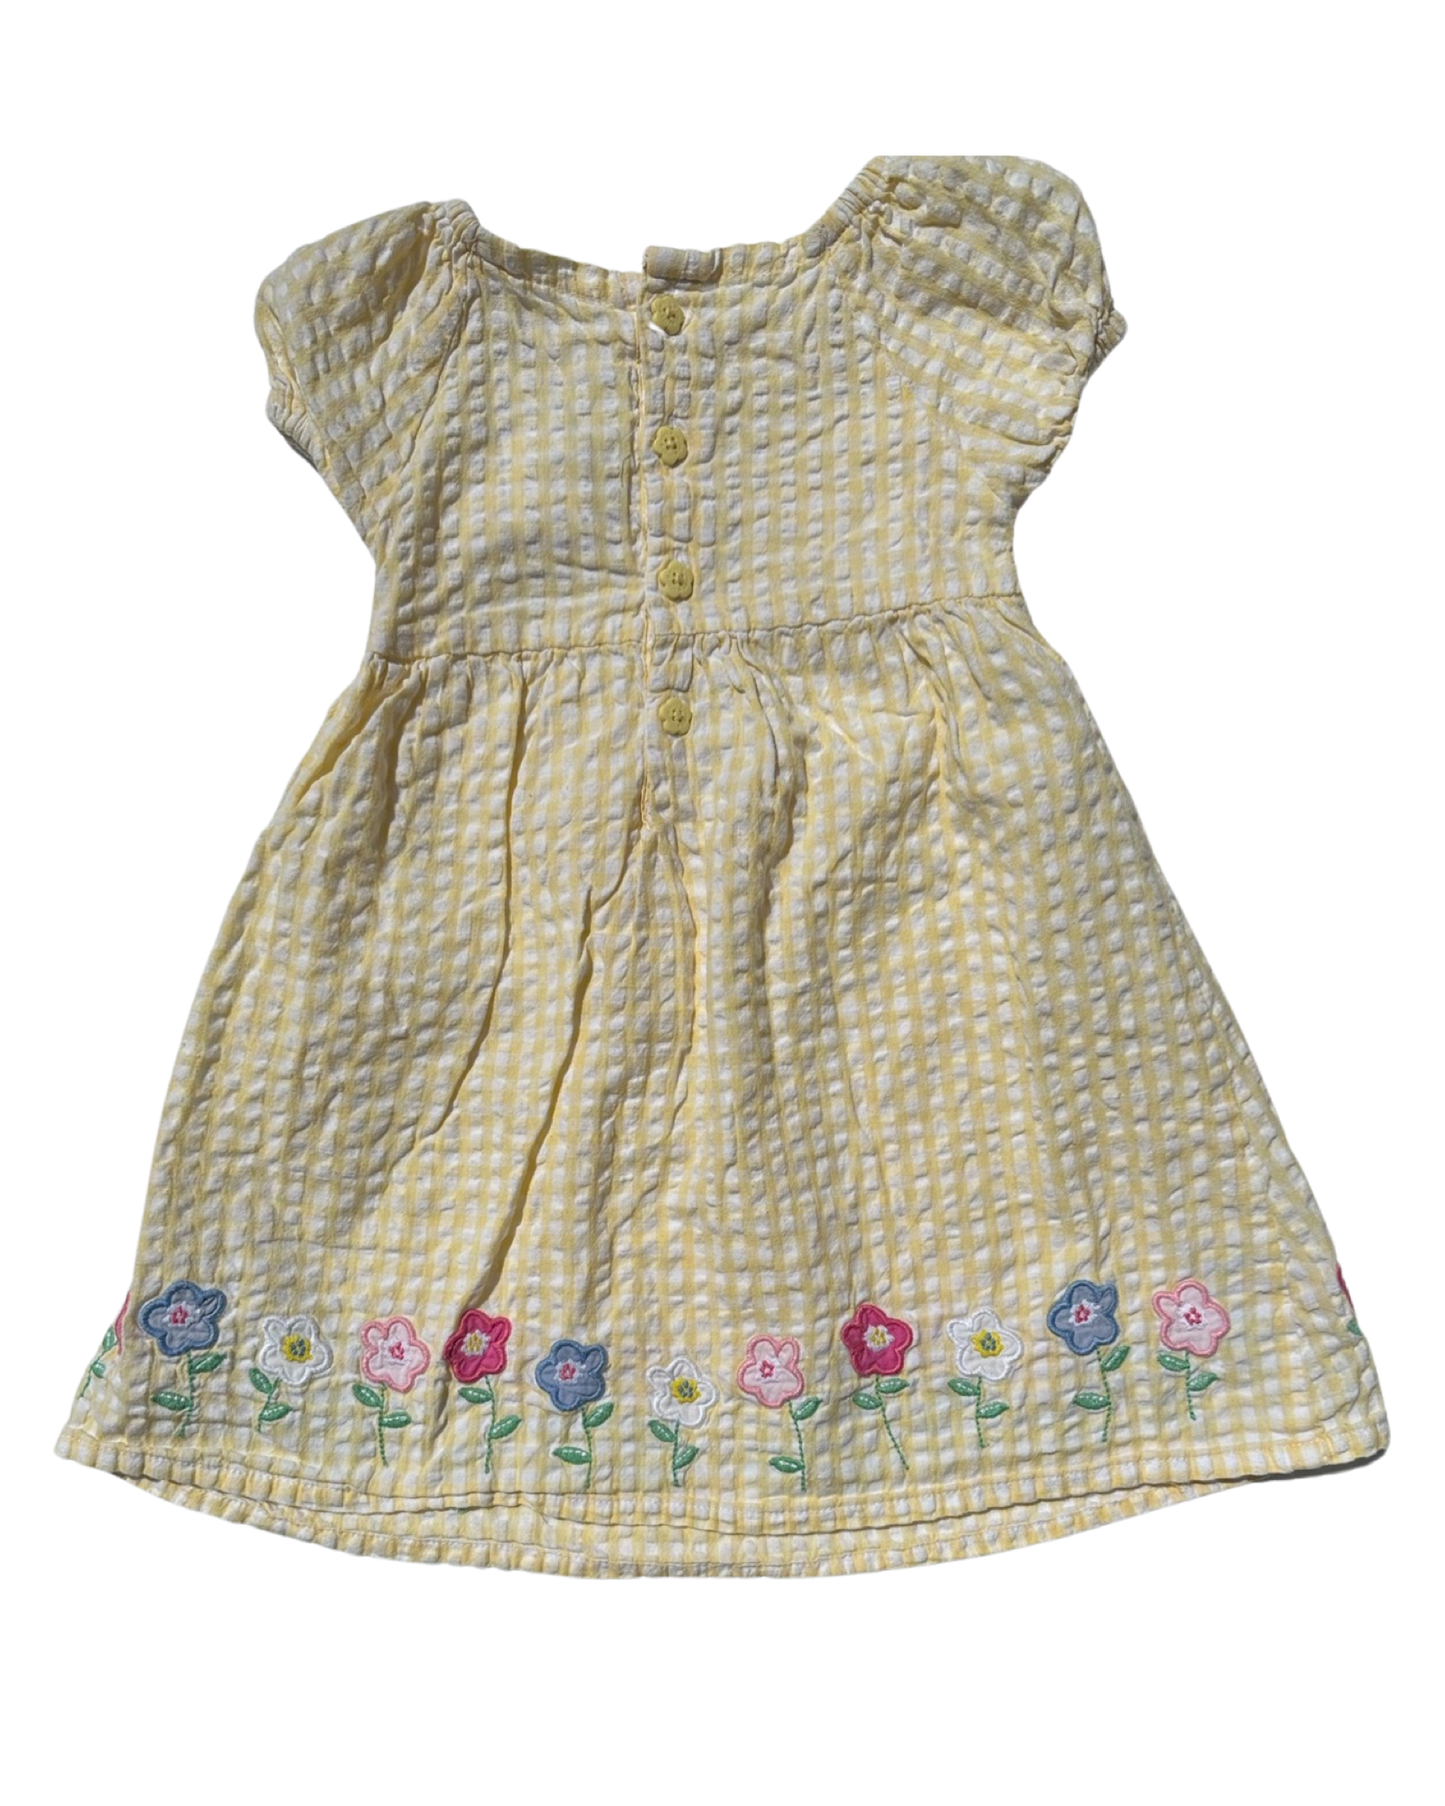 JoJo Maman Bebe yellow gingham dress (size 6-12mths)